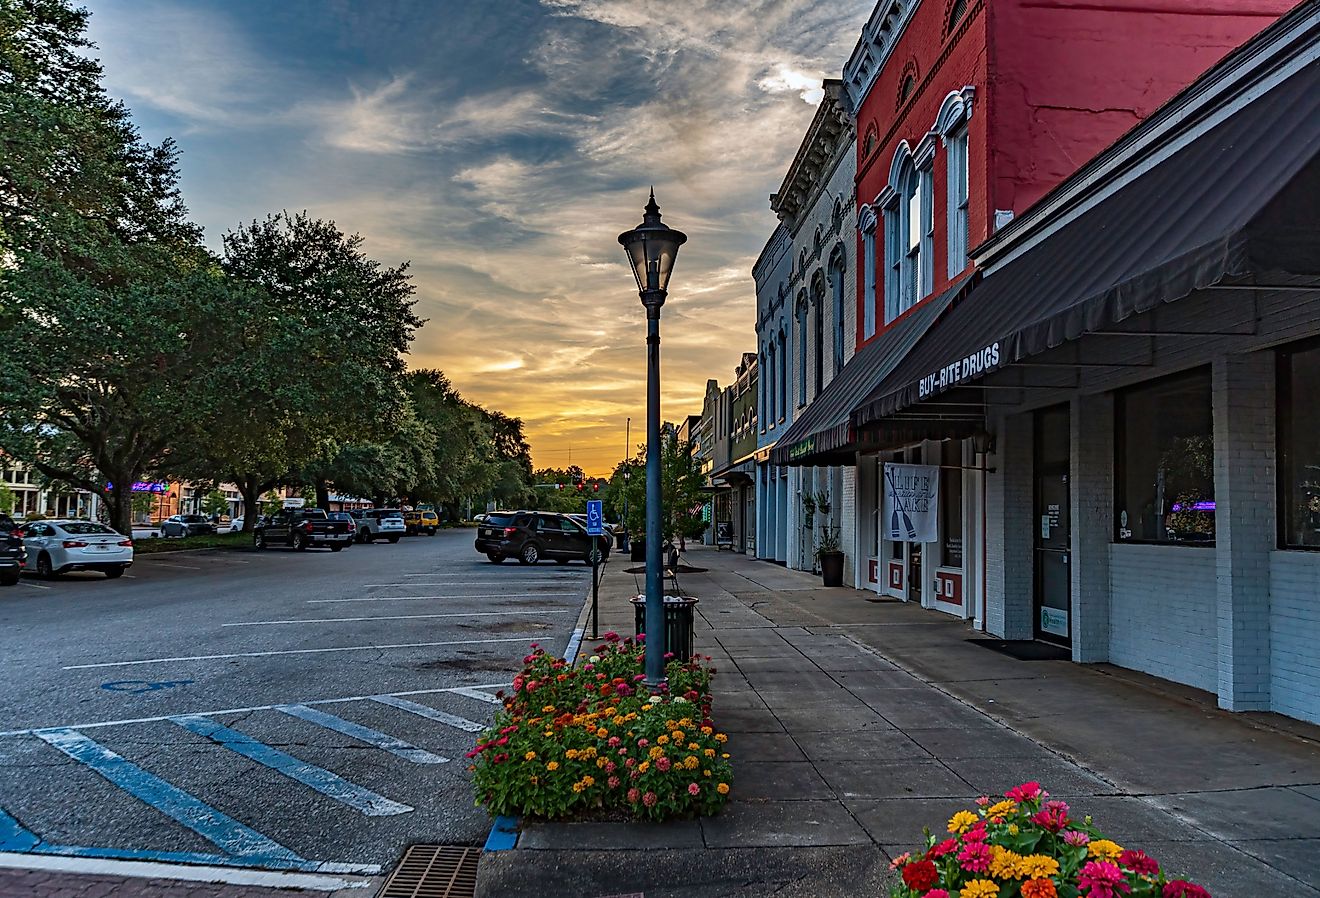 Scenic view of historic downtown Eufaula, Alabama at sunset. Image credit JNix via Shutterstock